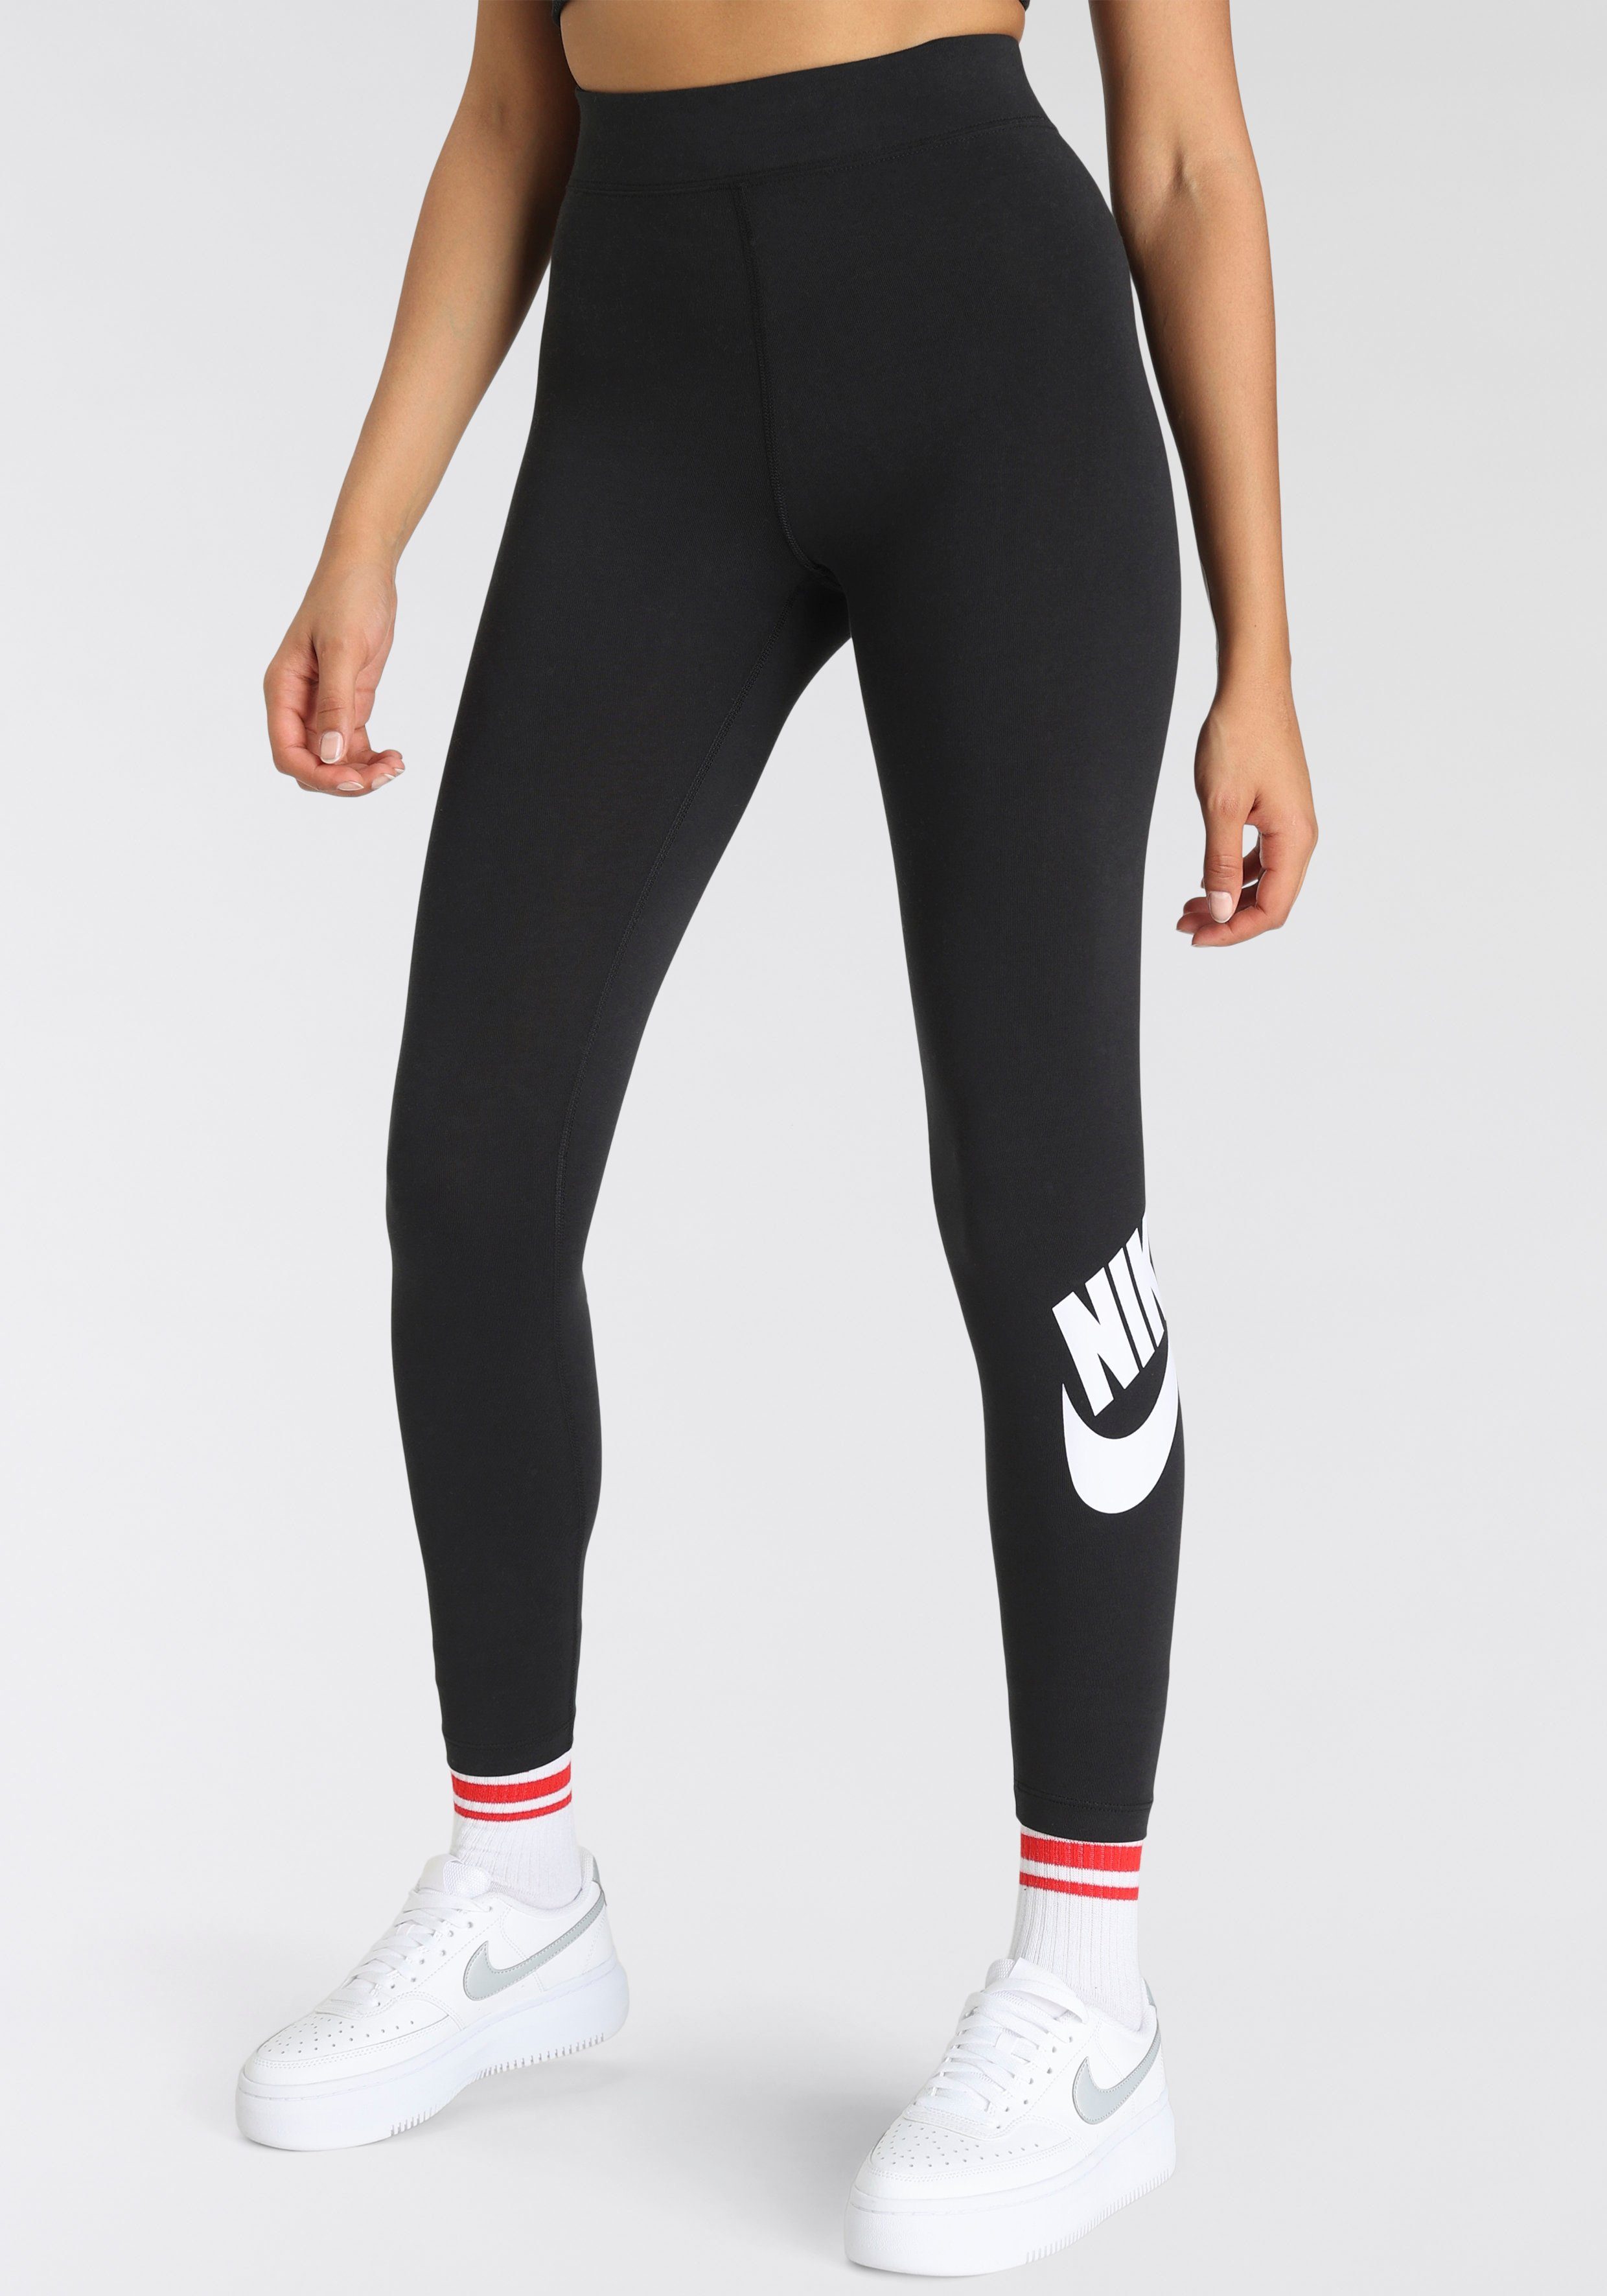 Nike legging Nike Sportswear Essential Women's High-rise Leggings